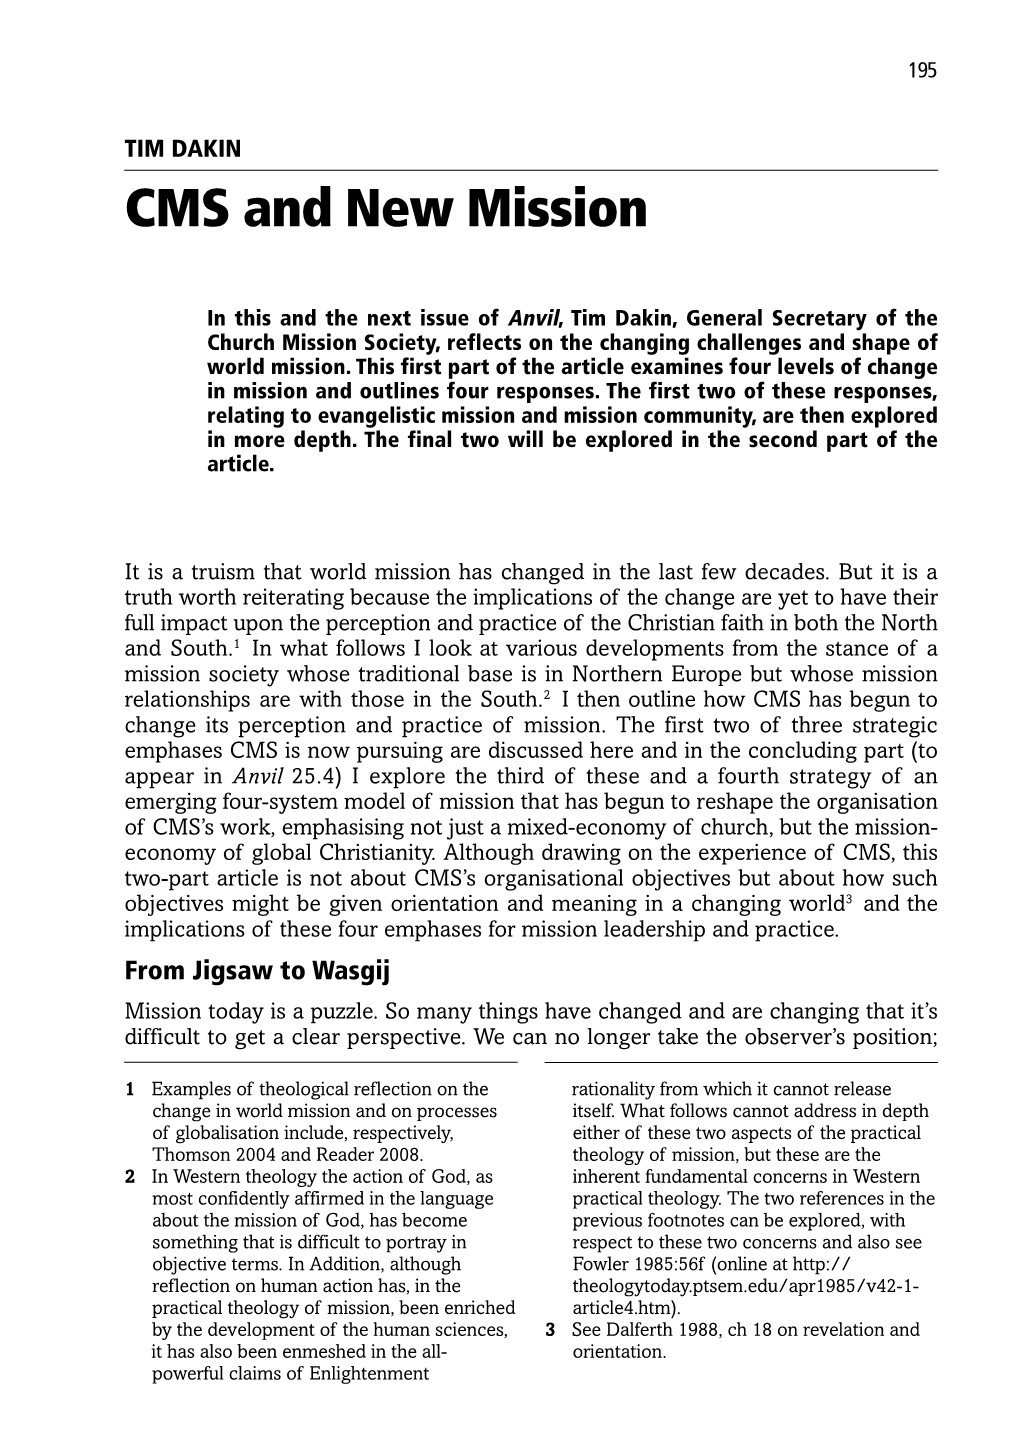 Tim Dakin, "CMS and New Mission," Anvil 25.3